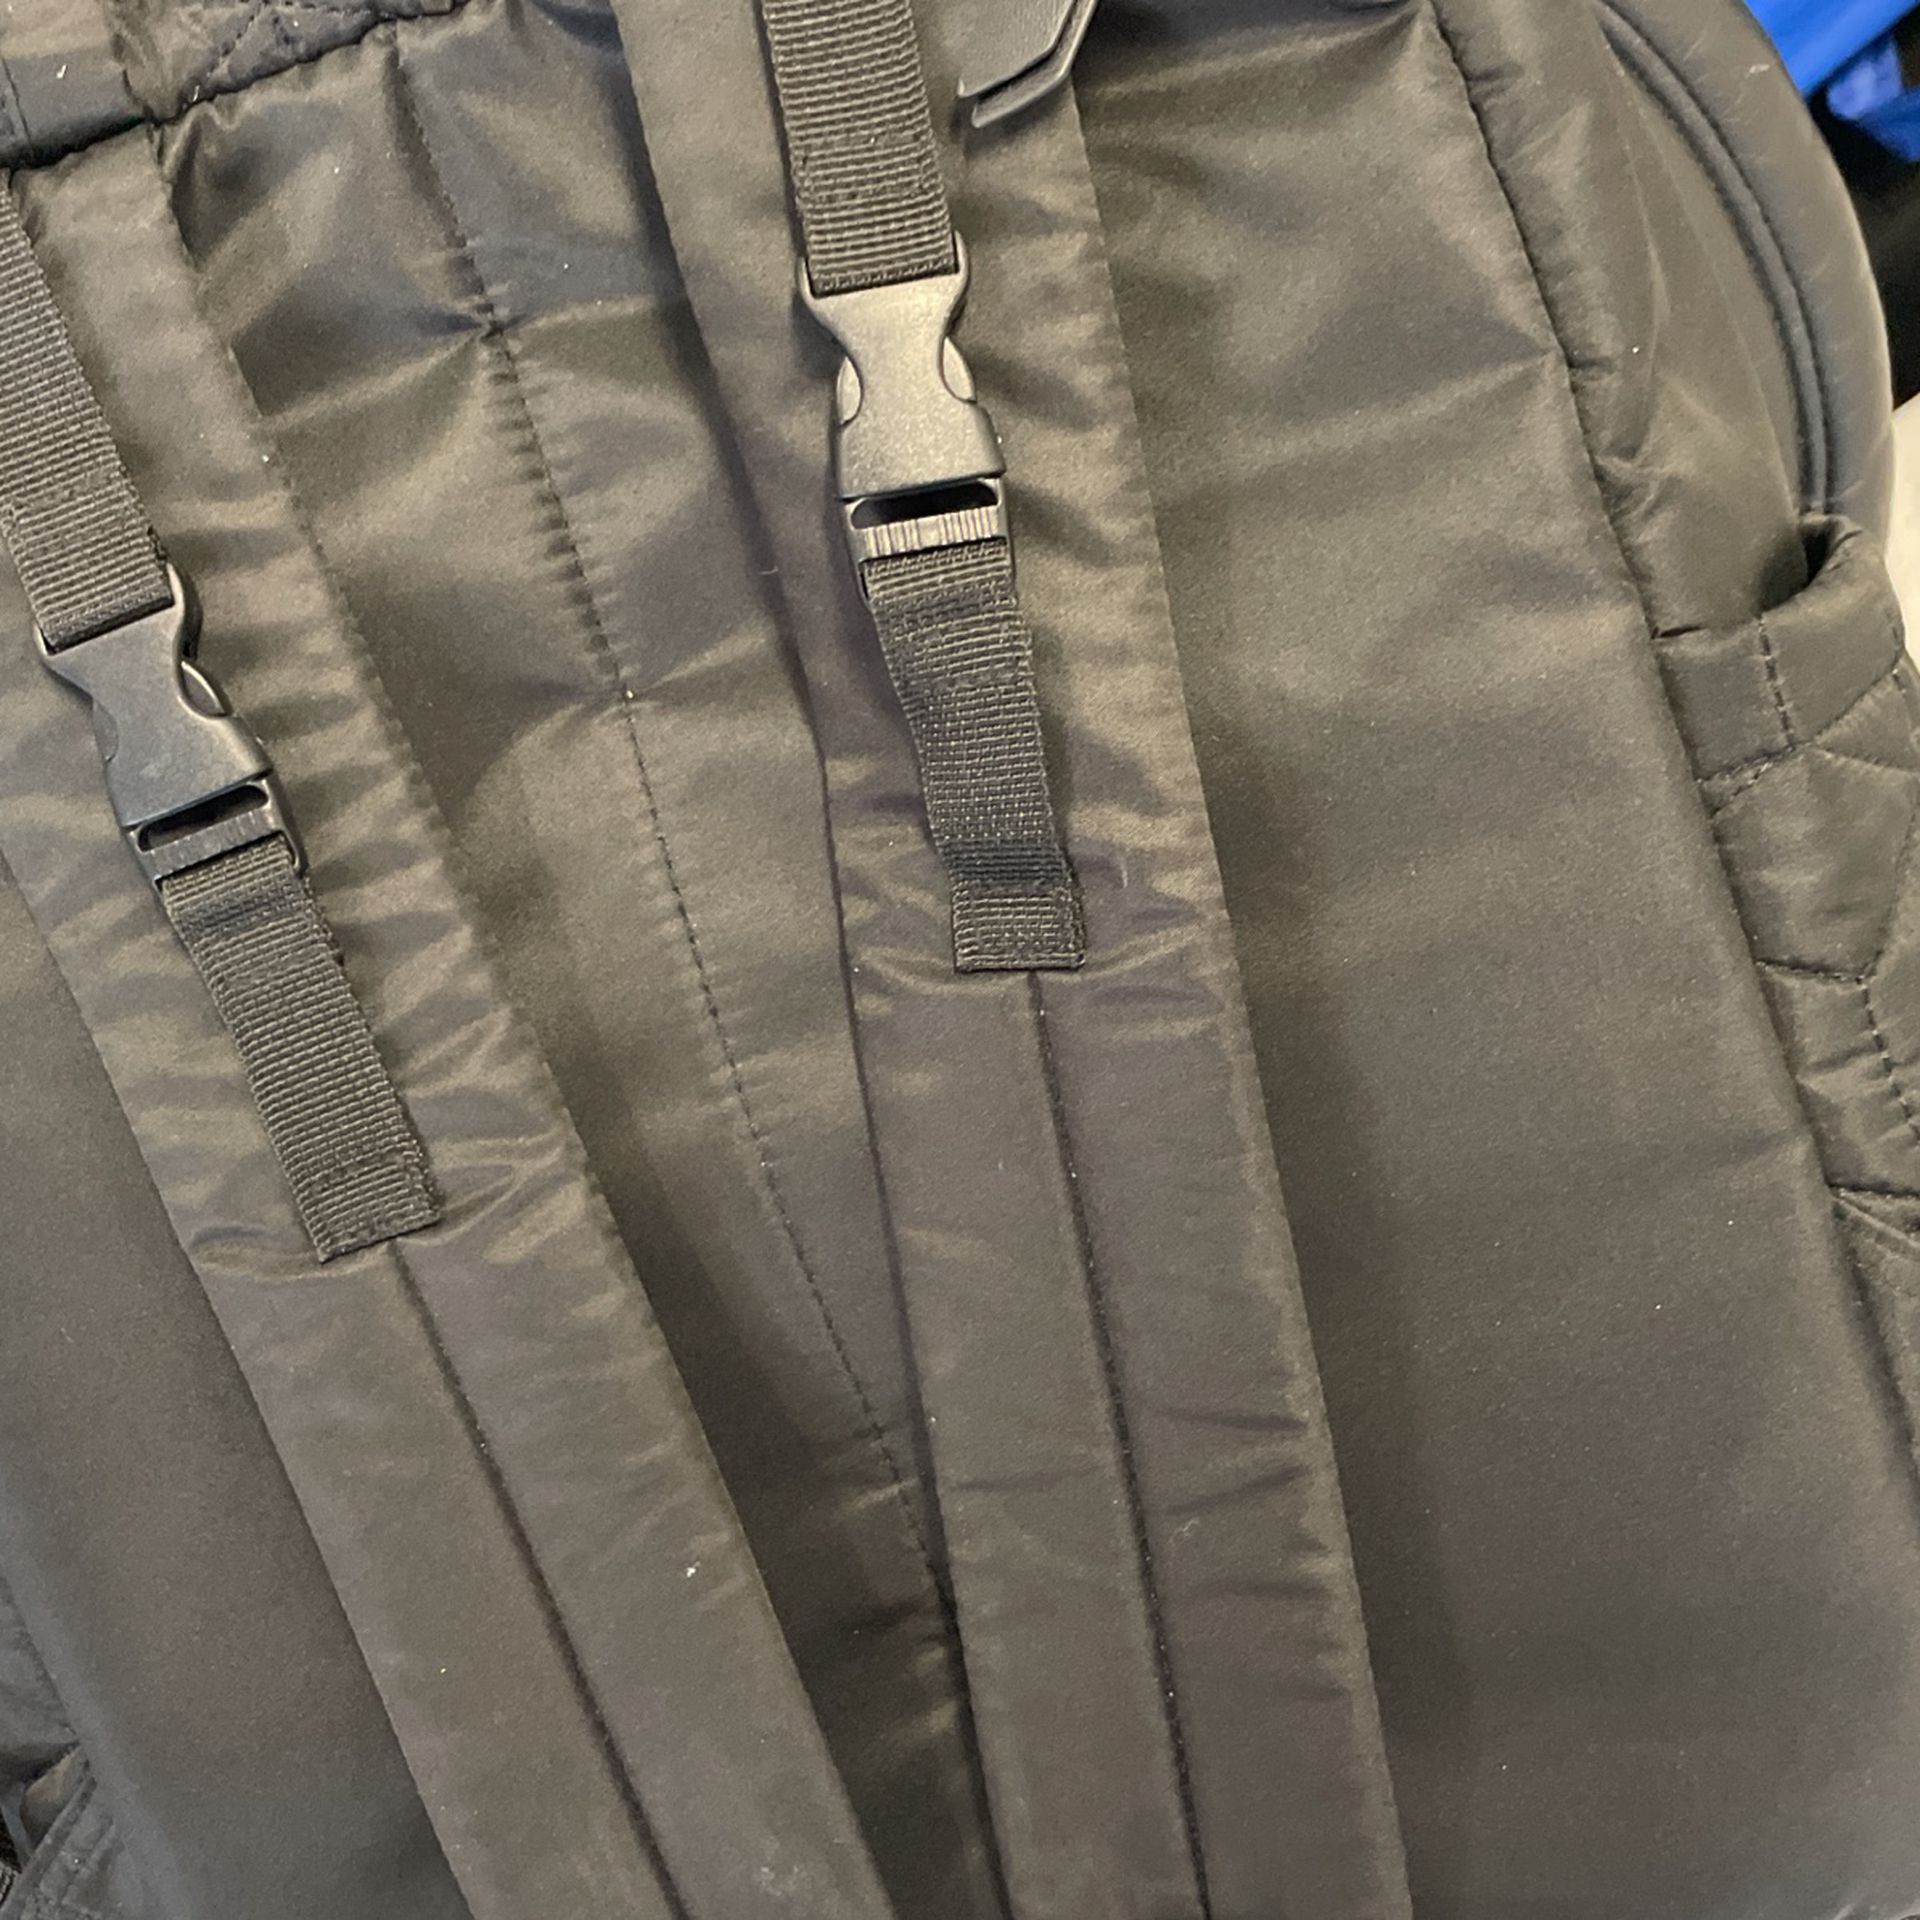 Skip Hop Diaper Bag Backpack: Forma, Multi-Function Baby Travel Bag 